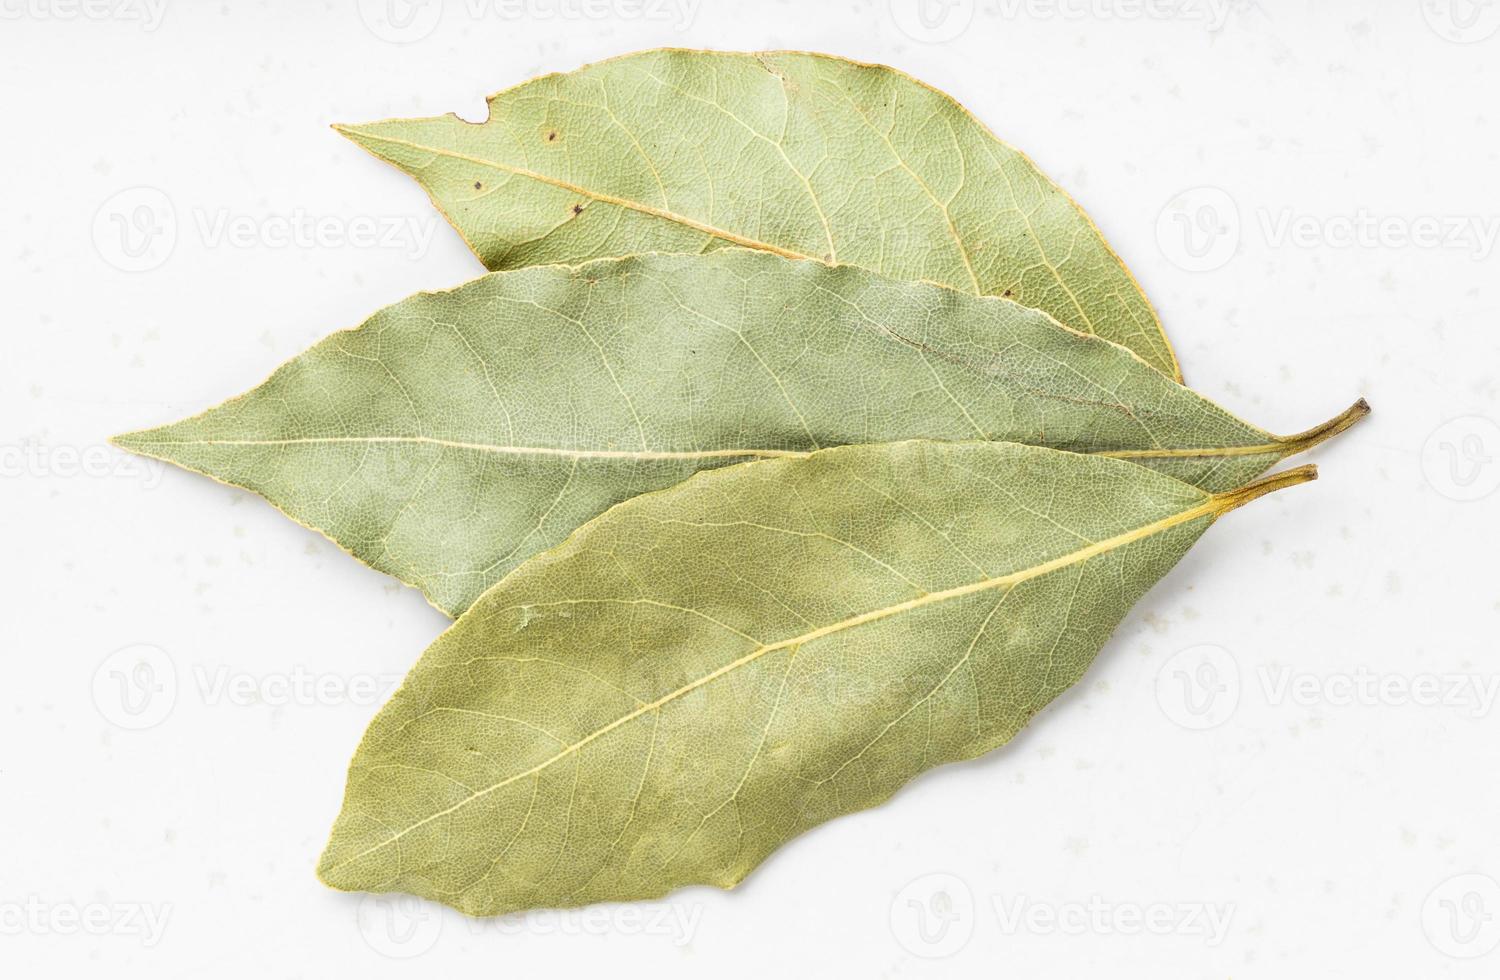 hojas de laurel secas naturales de cerca en gris foto